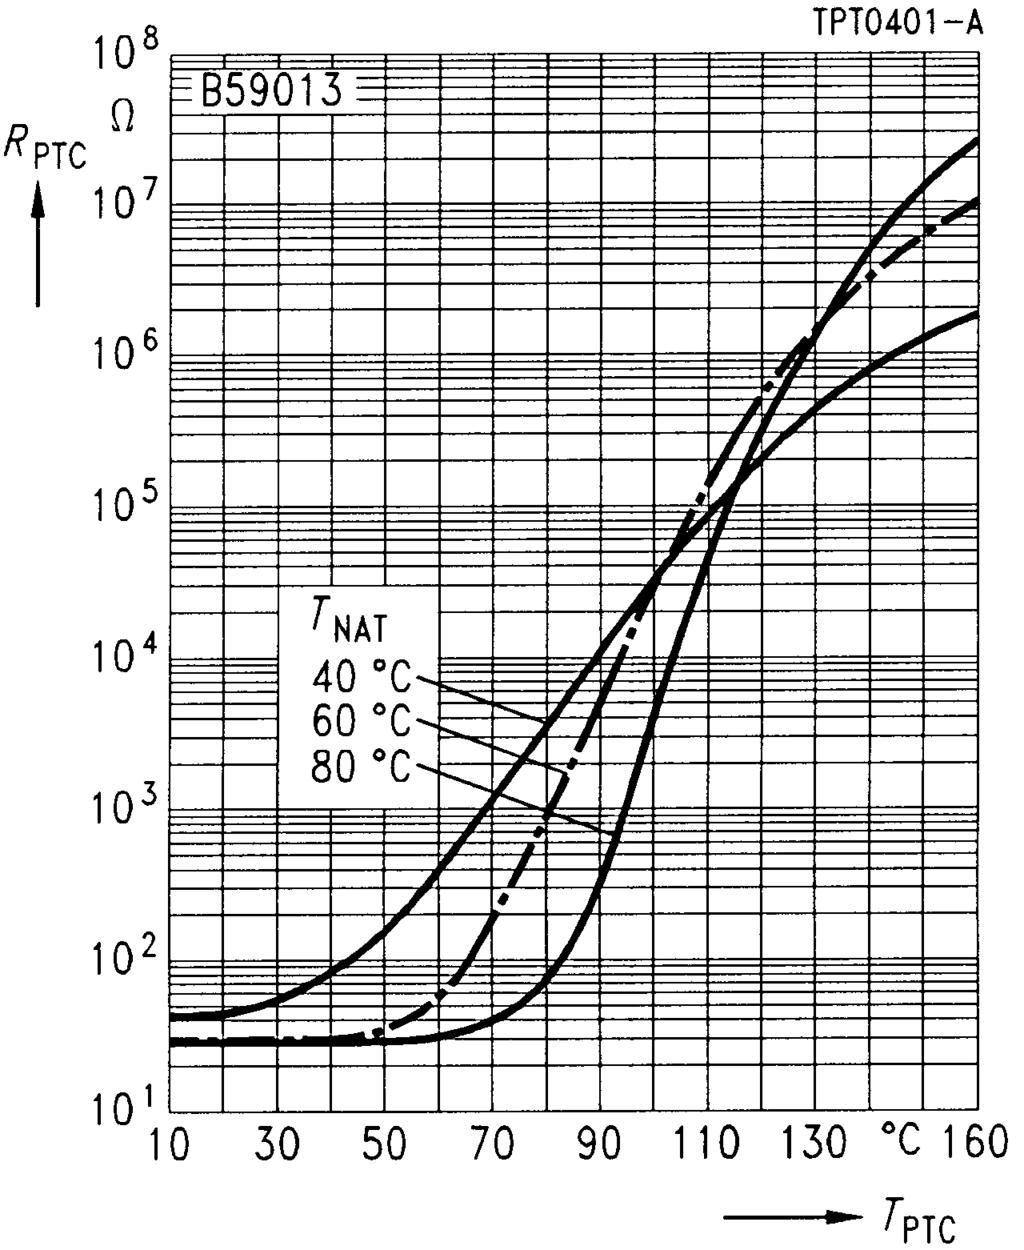 B59013 C 1013 Characteristics (typical) PTC resistance R PTC versus PTC temperature T PTC (measured at low